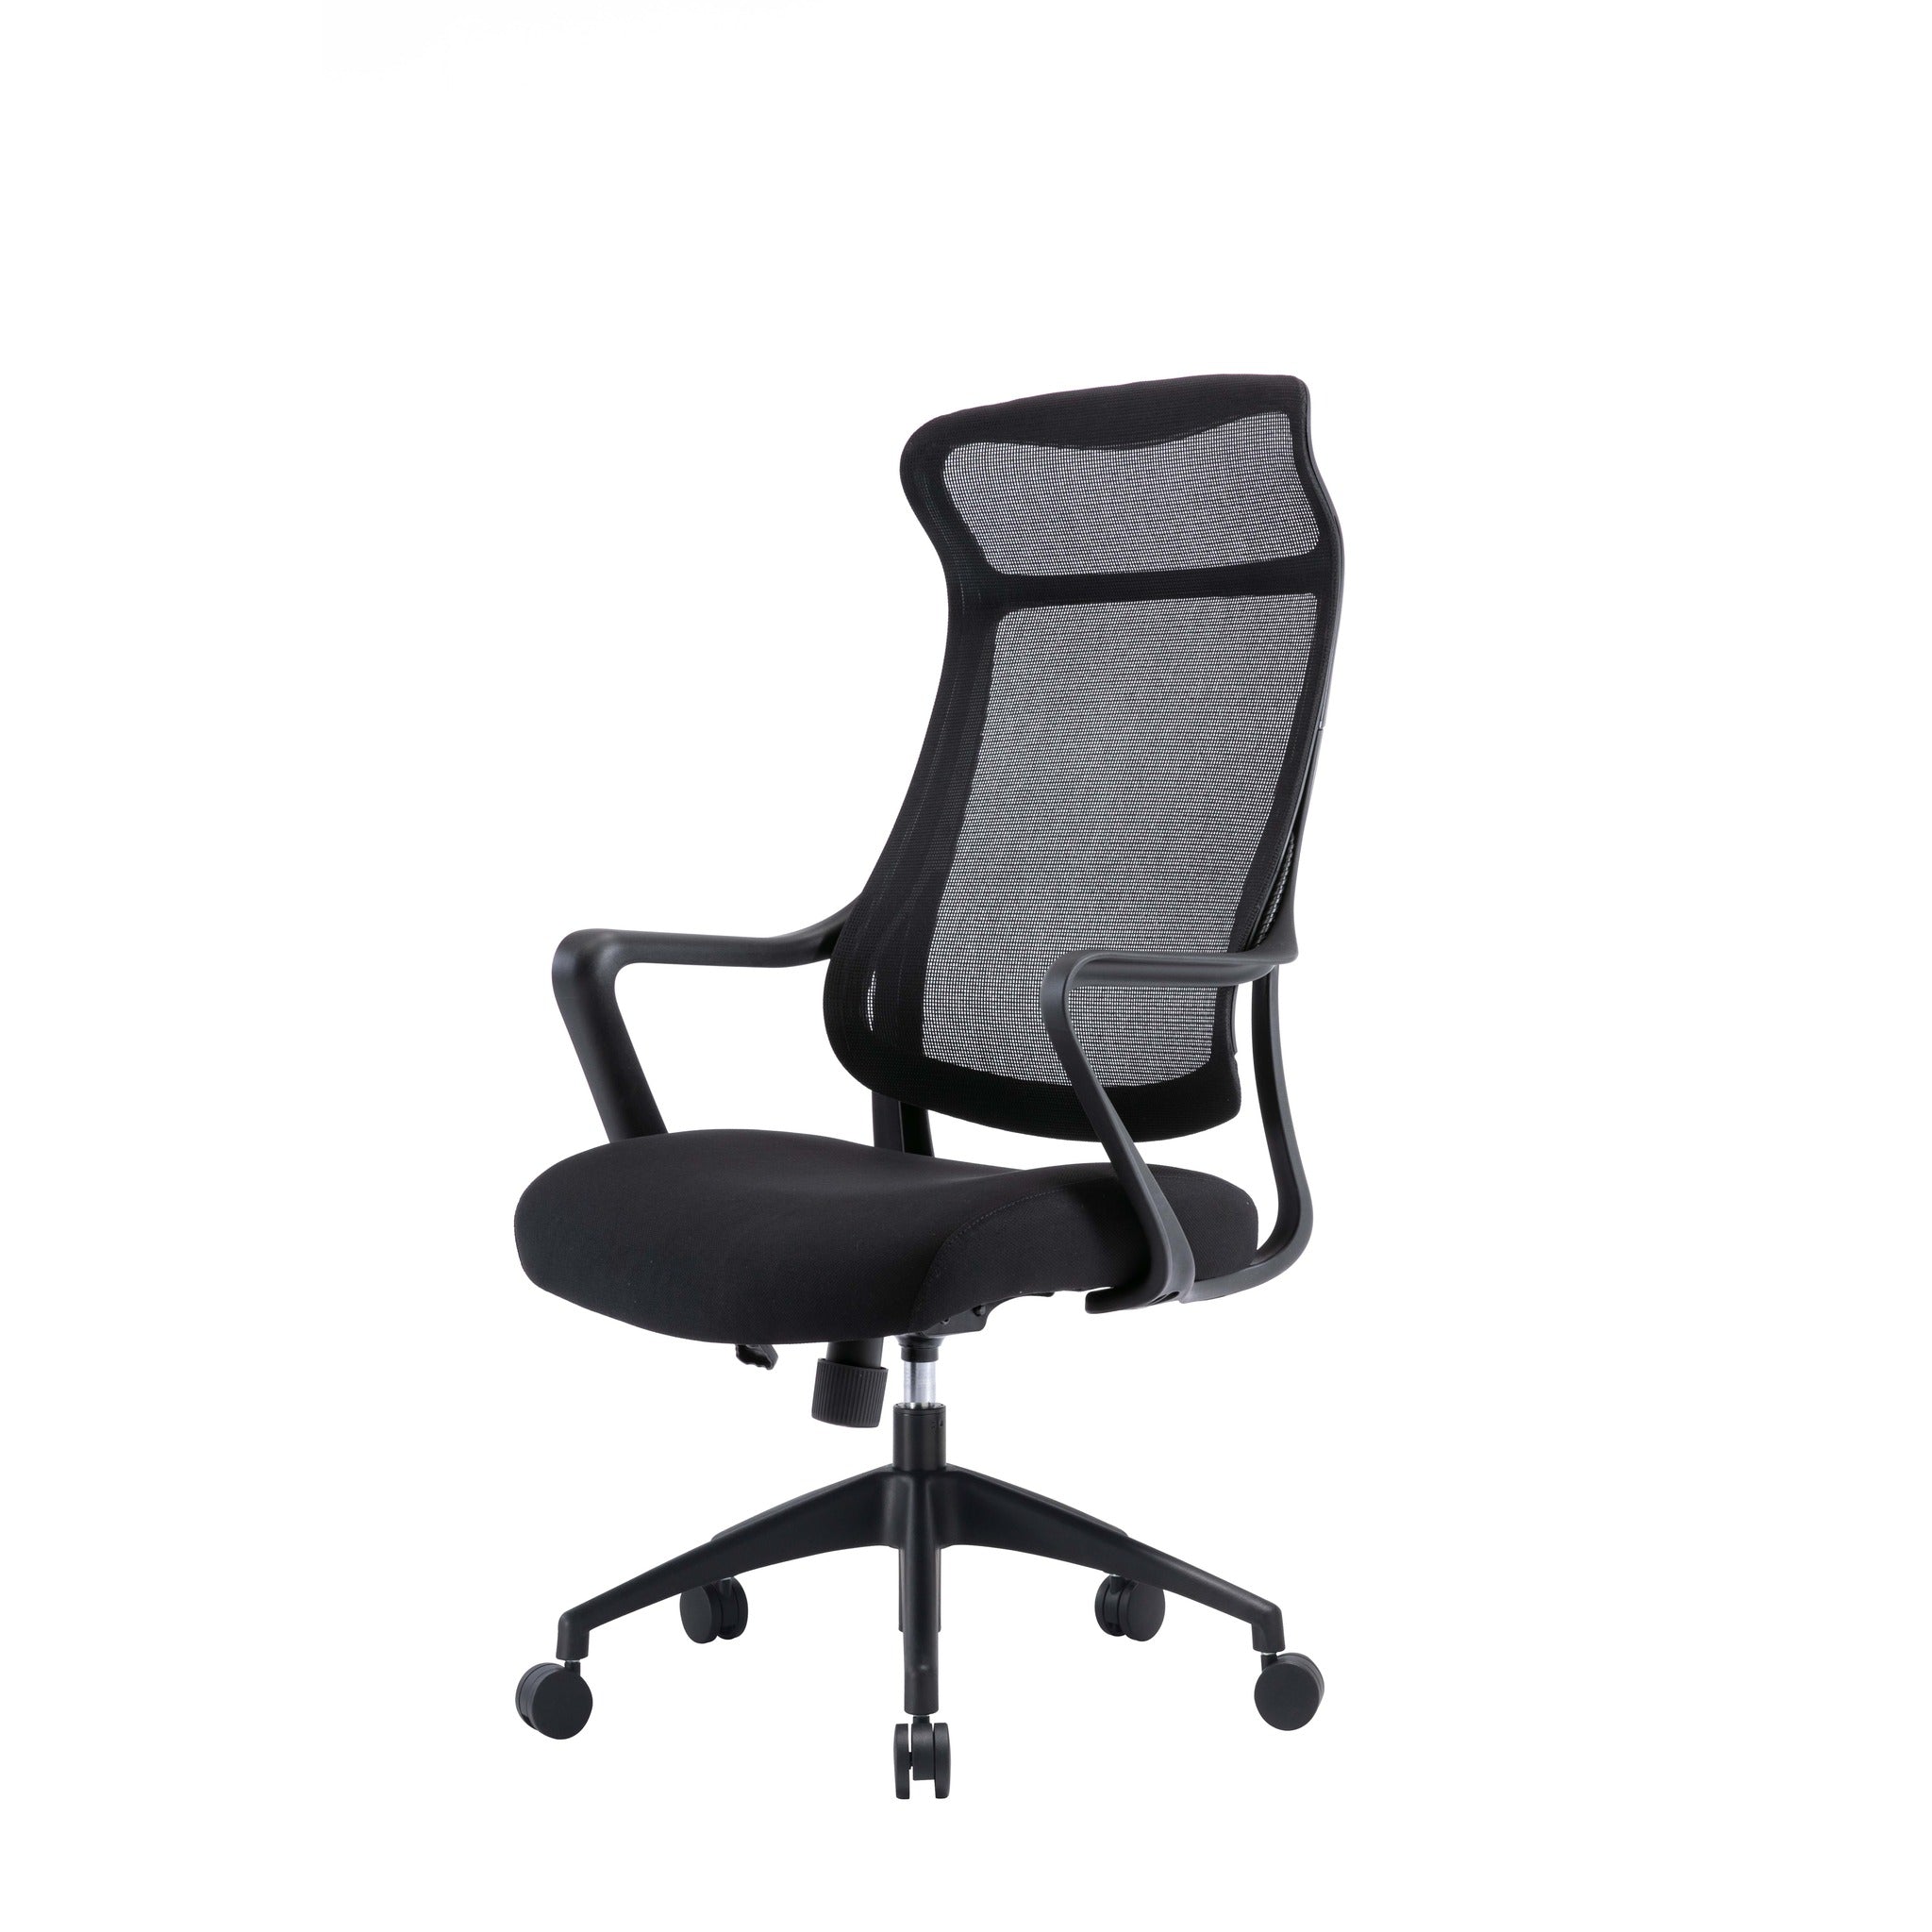 Lyman Mesh Ergonomic Office Chair - Black